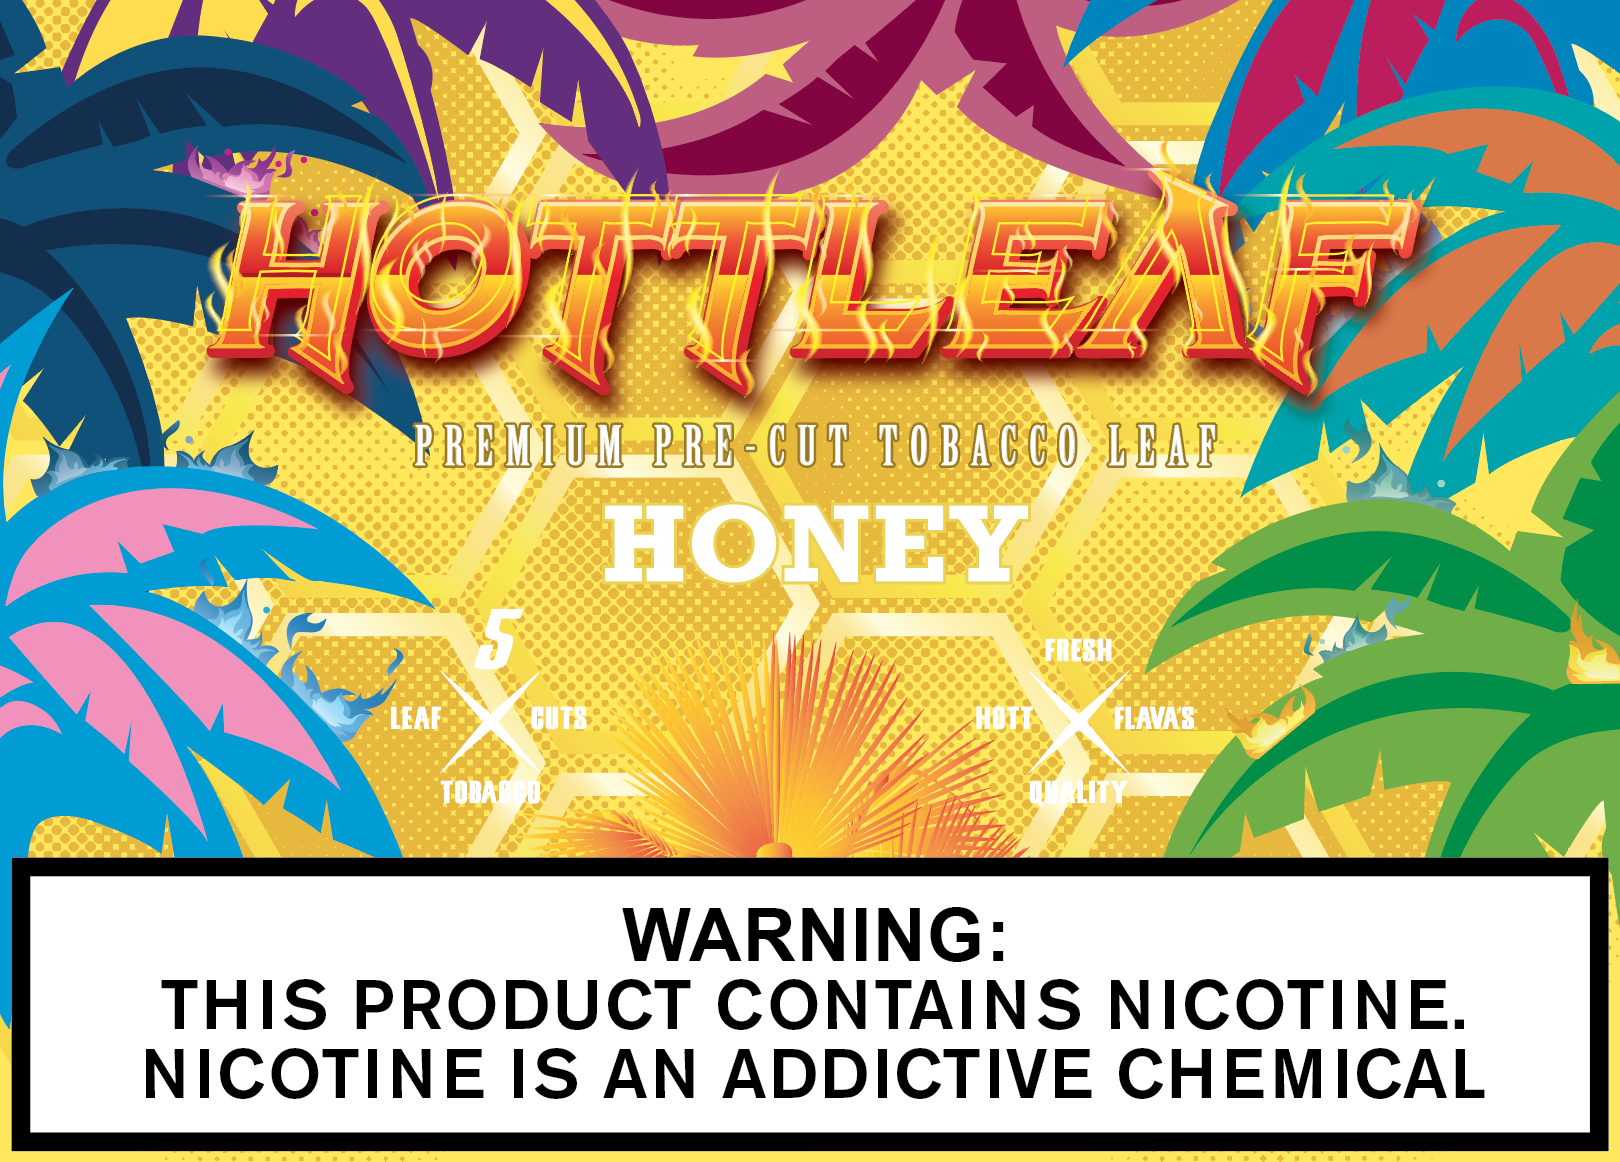 Hottleaf premium cut honey tobacco leaf 8/5pk